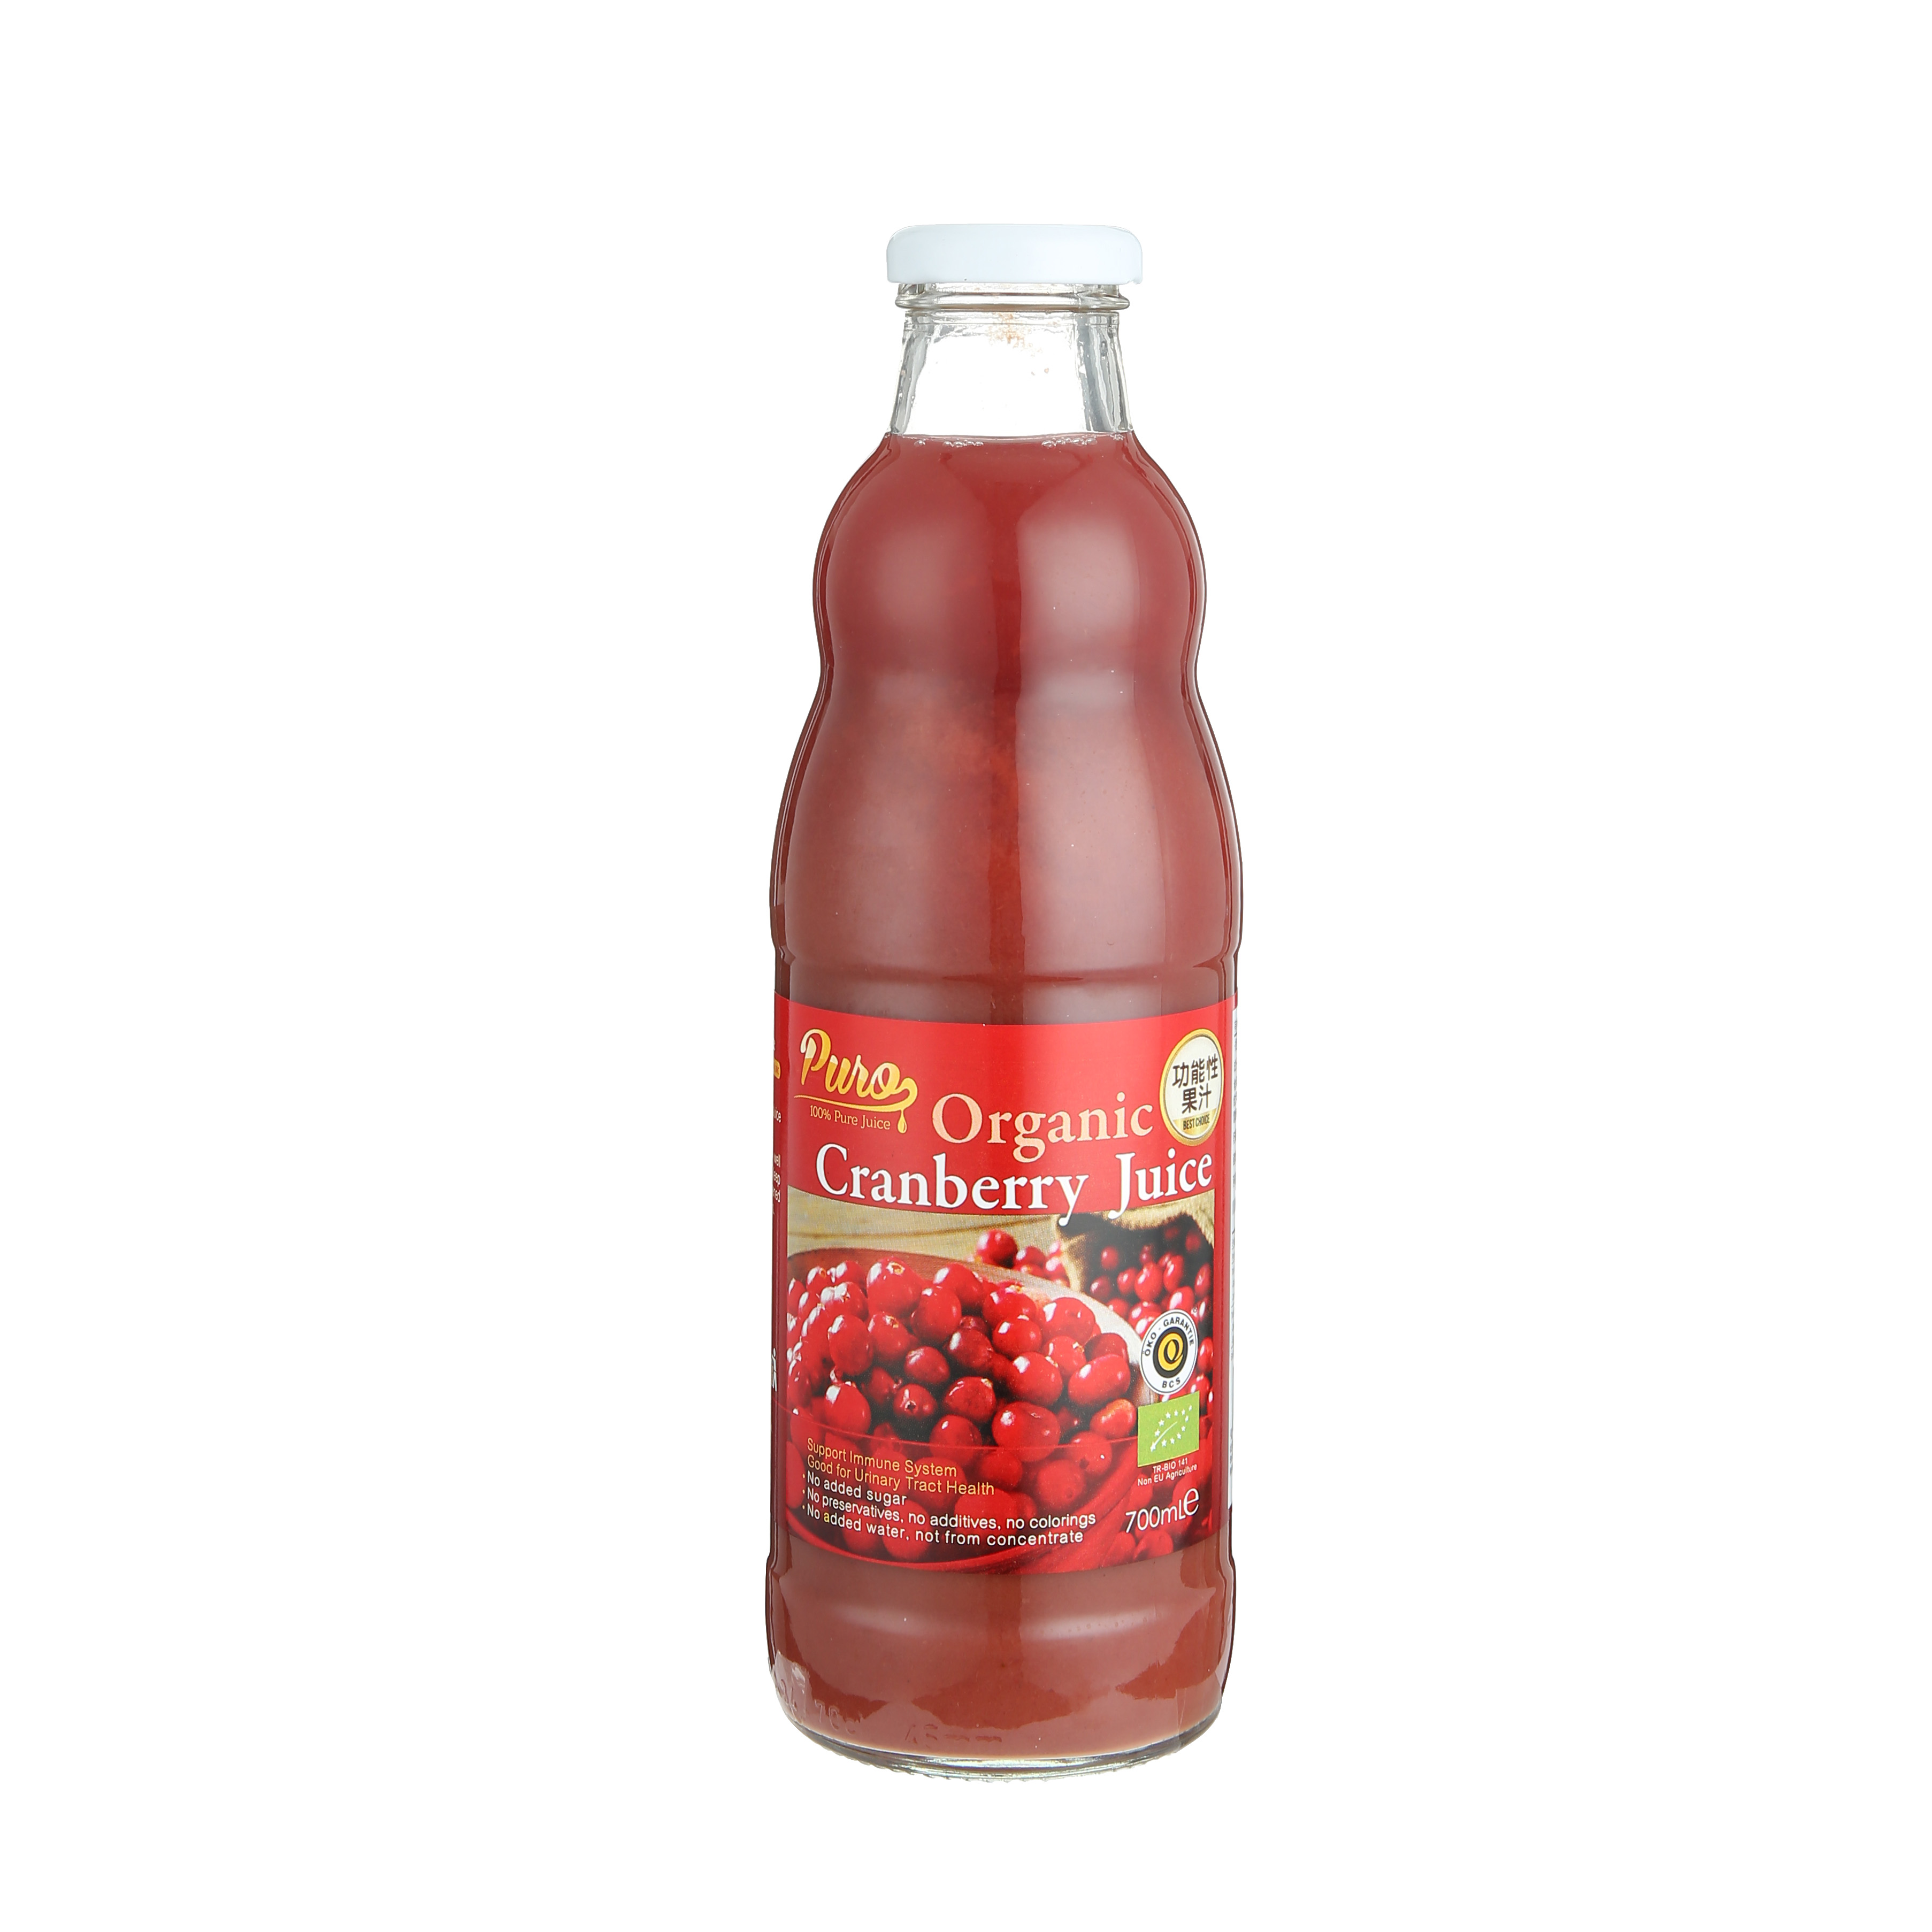 Puro百份百有機純小紅莓汁700ml